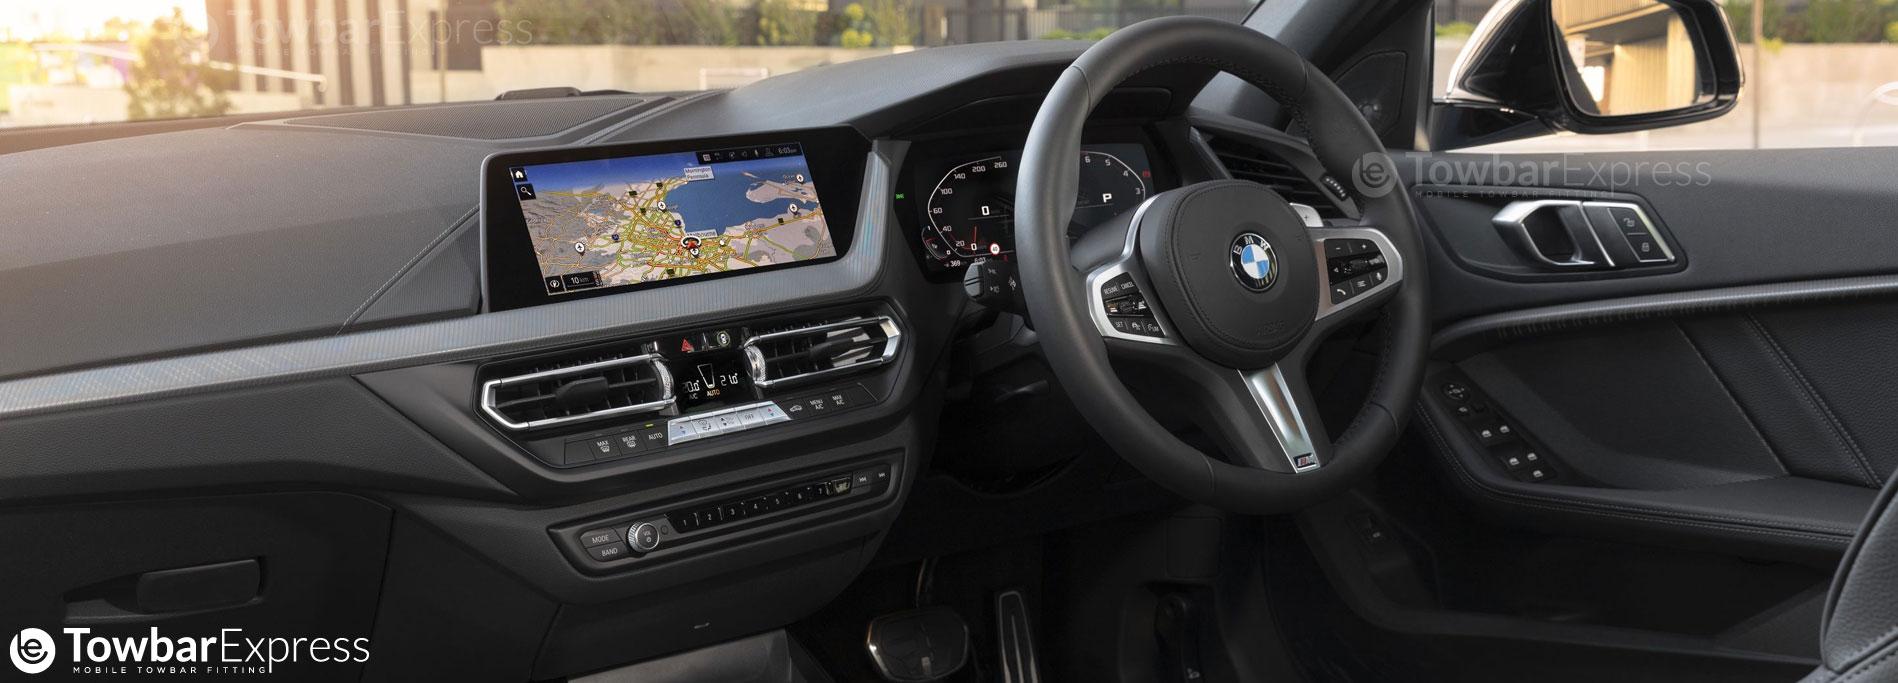 BMW 1 Series Towbars